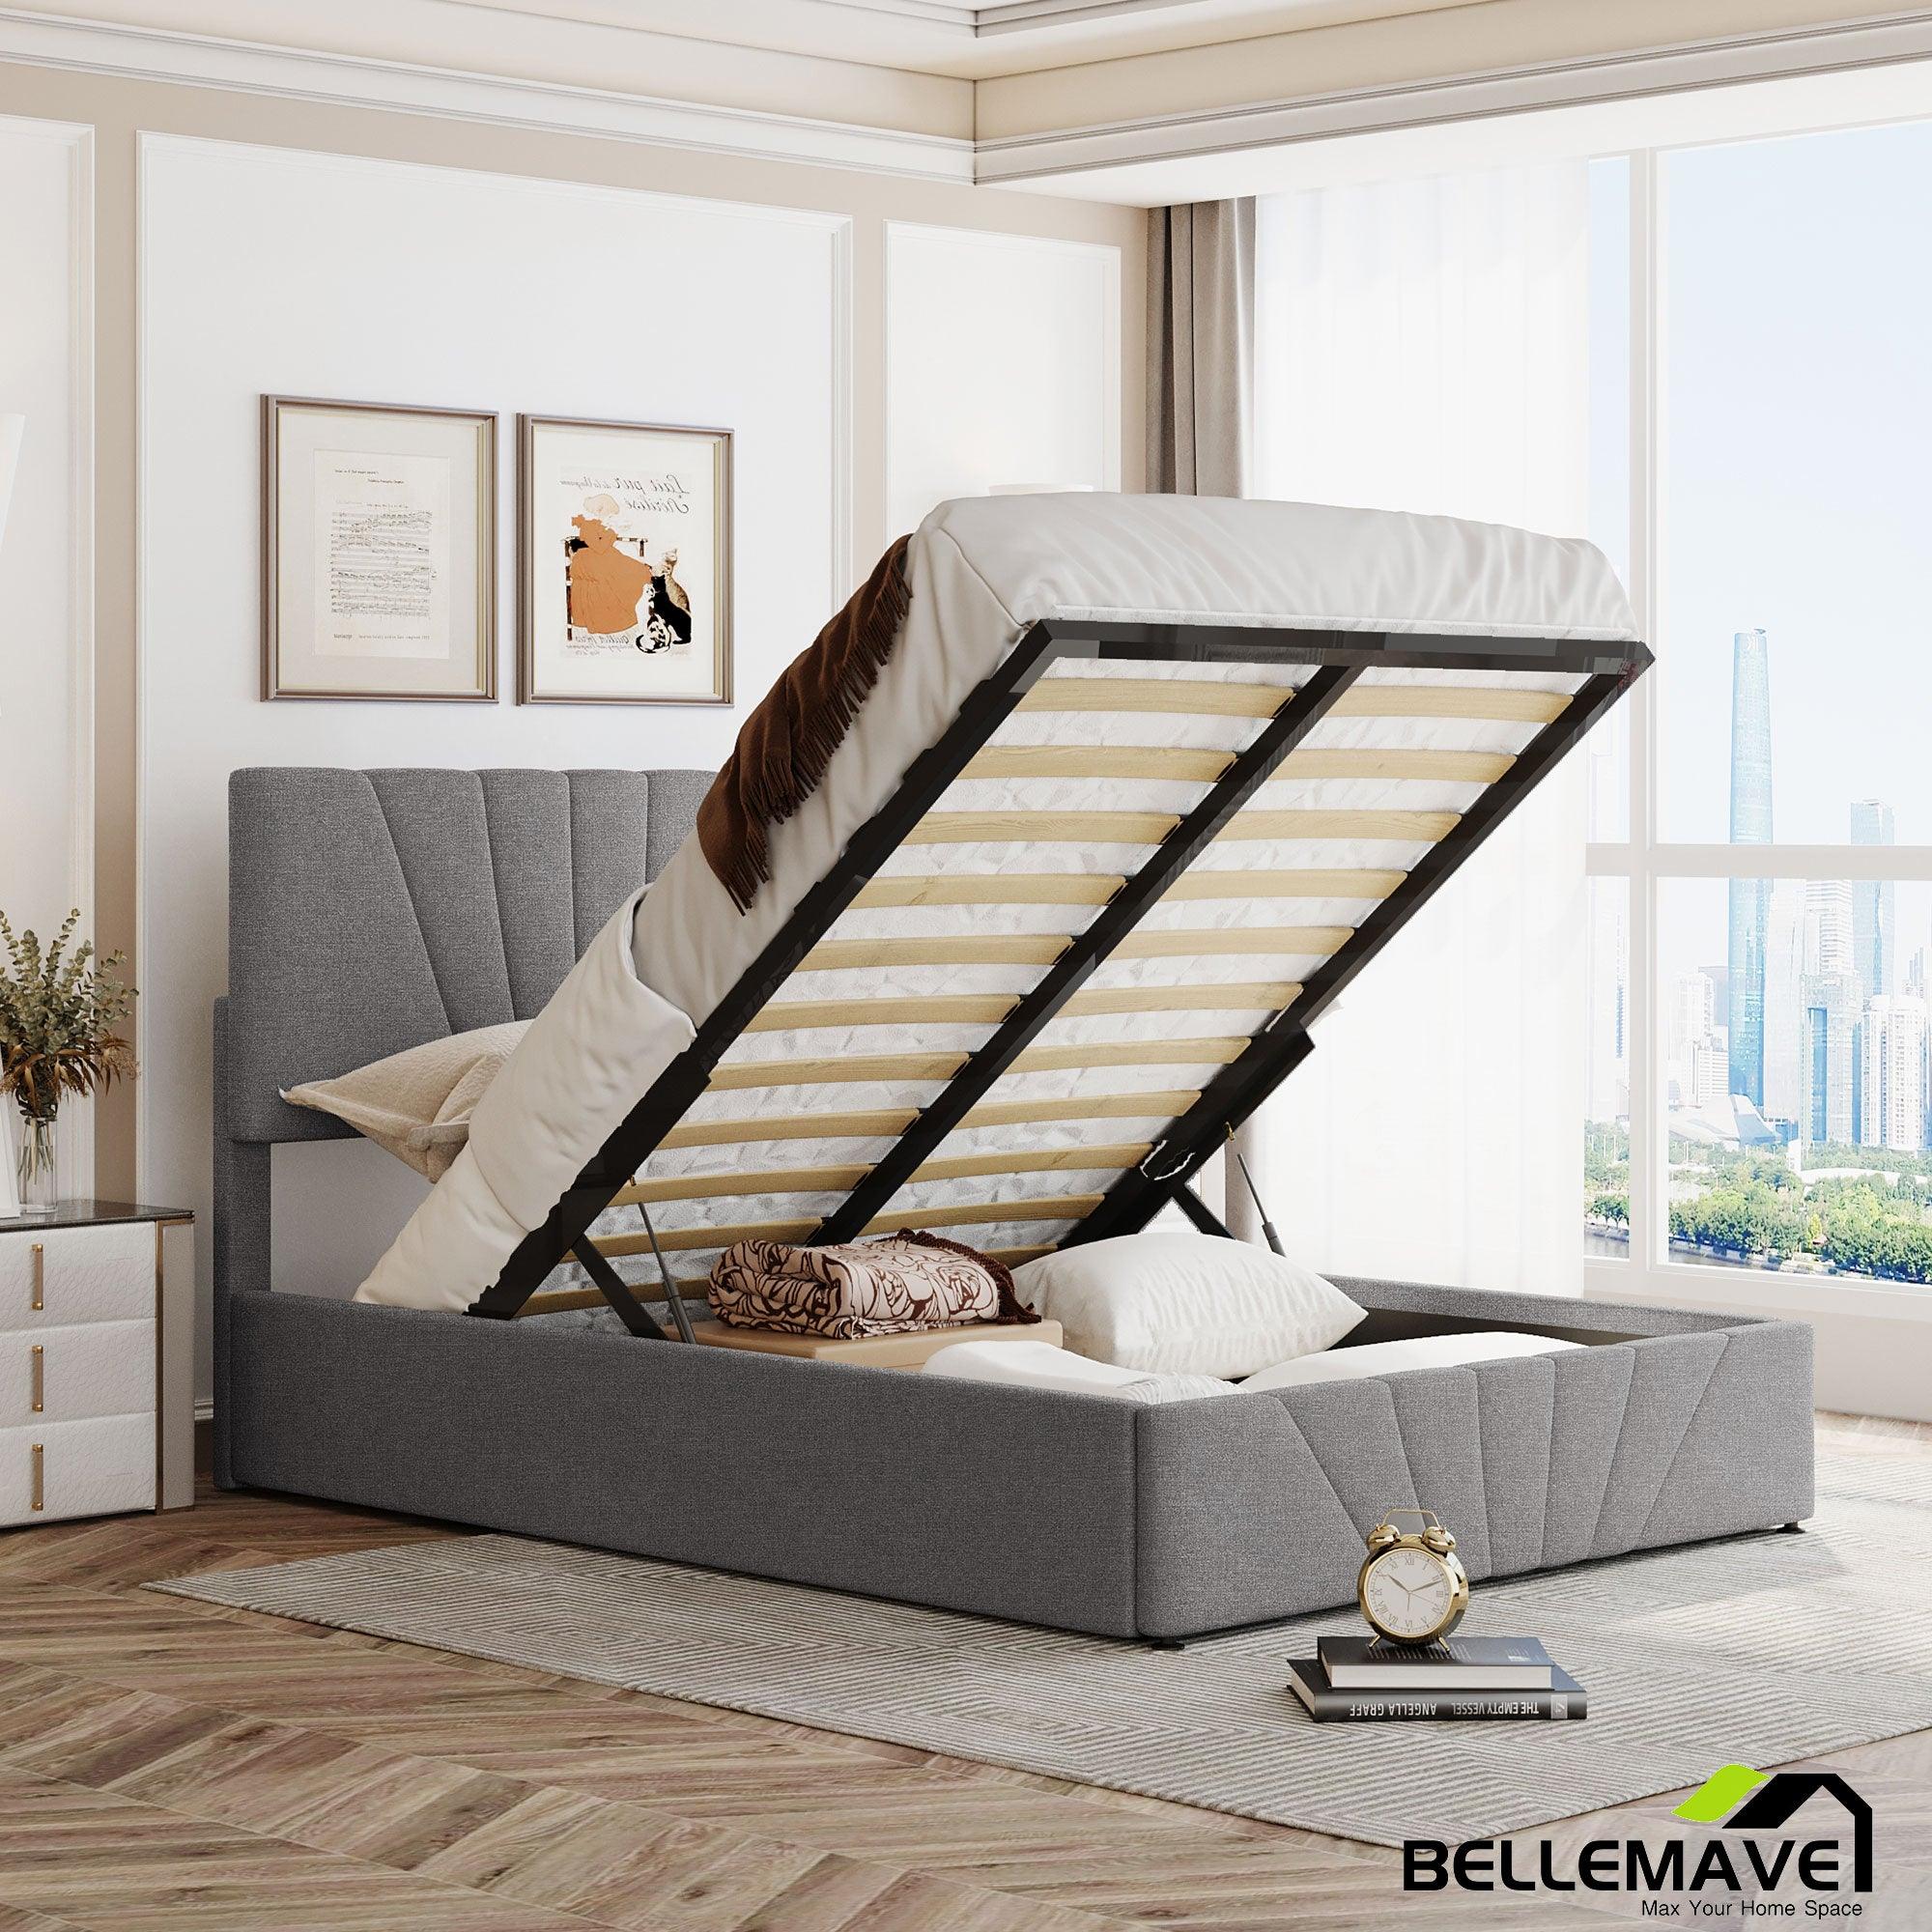 Bellemave Upholstered Platform bed with a Hydraulic Storage - Bellemave